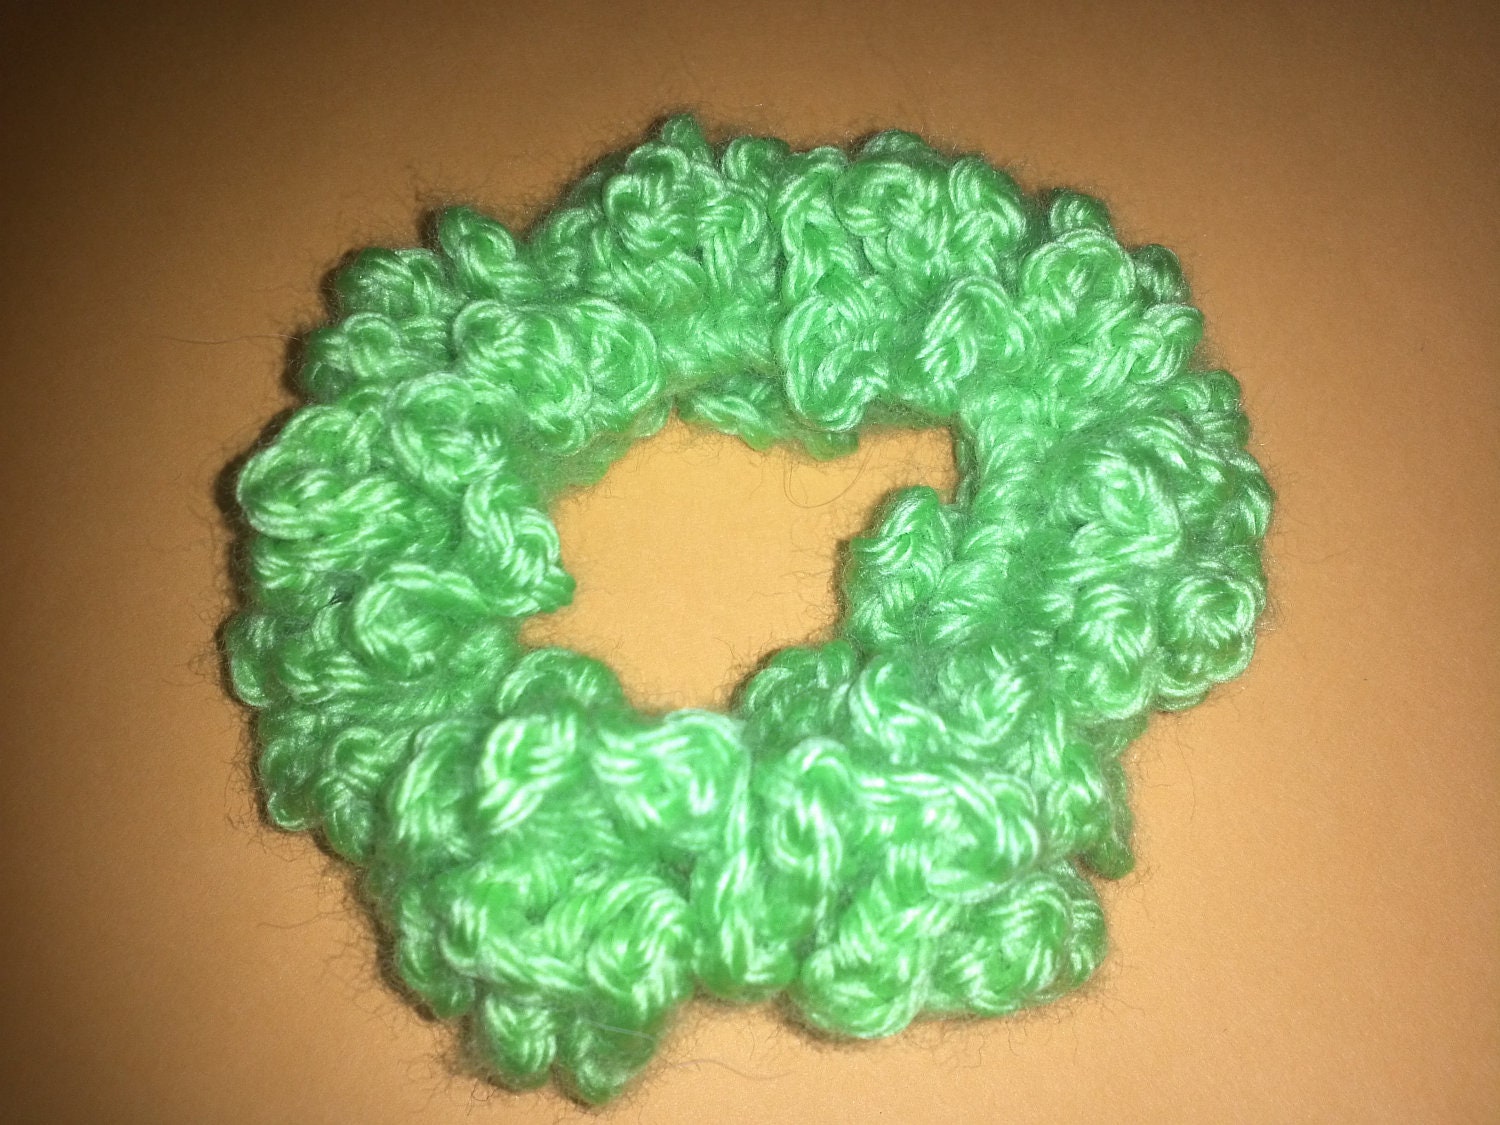 Handmade Crocheted Scrunchie Hair Band Ponytail Holder in Lime Green, SPECIAL OFFER INSIDE (24)